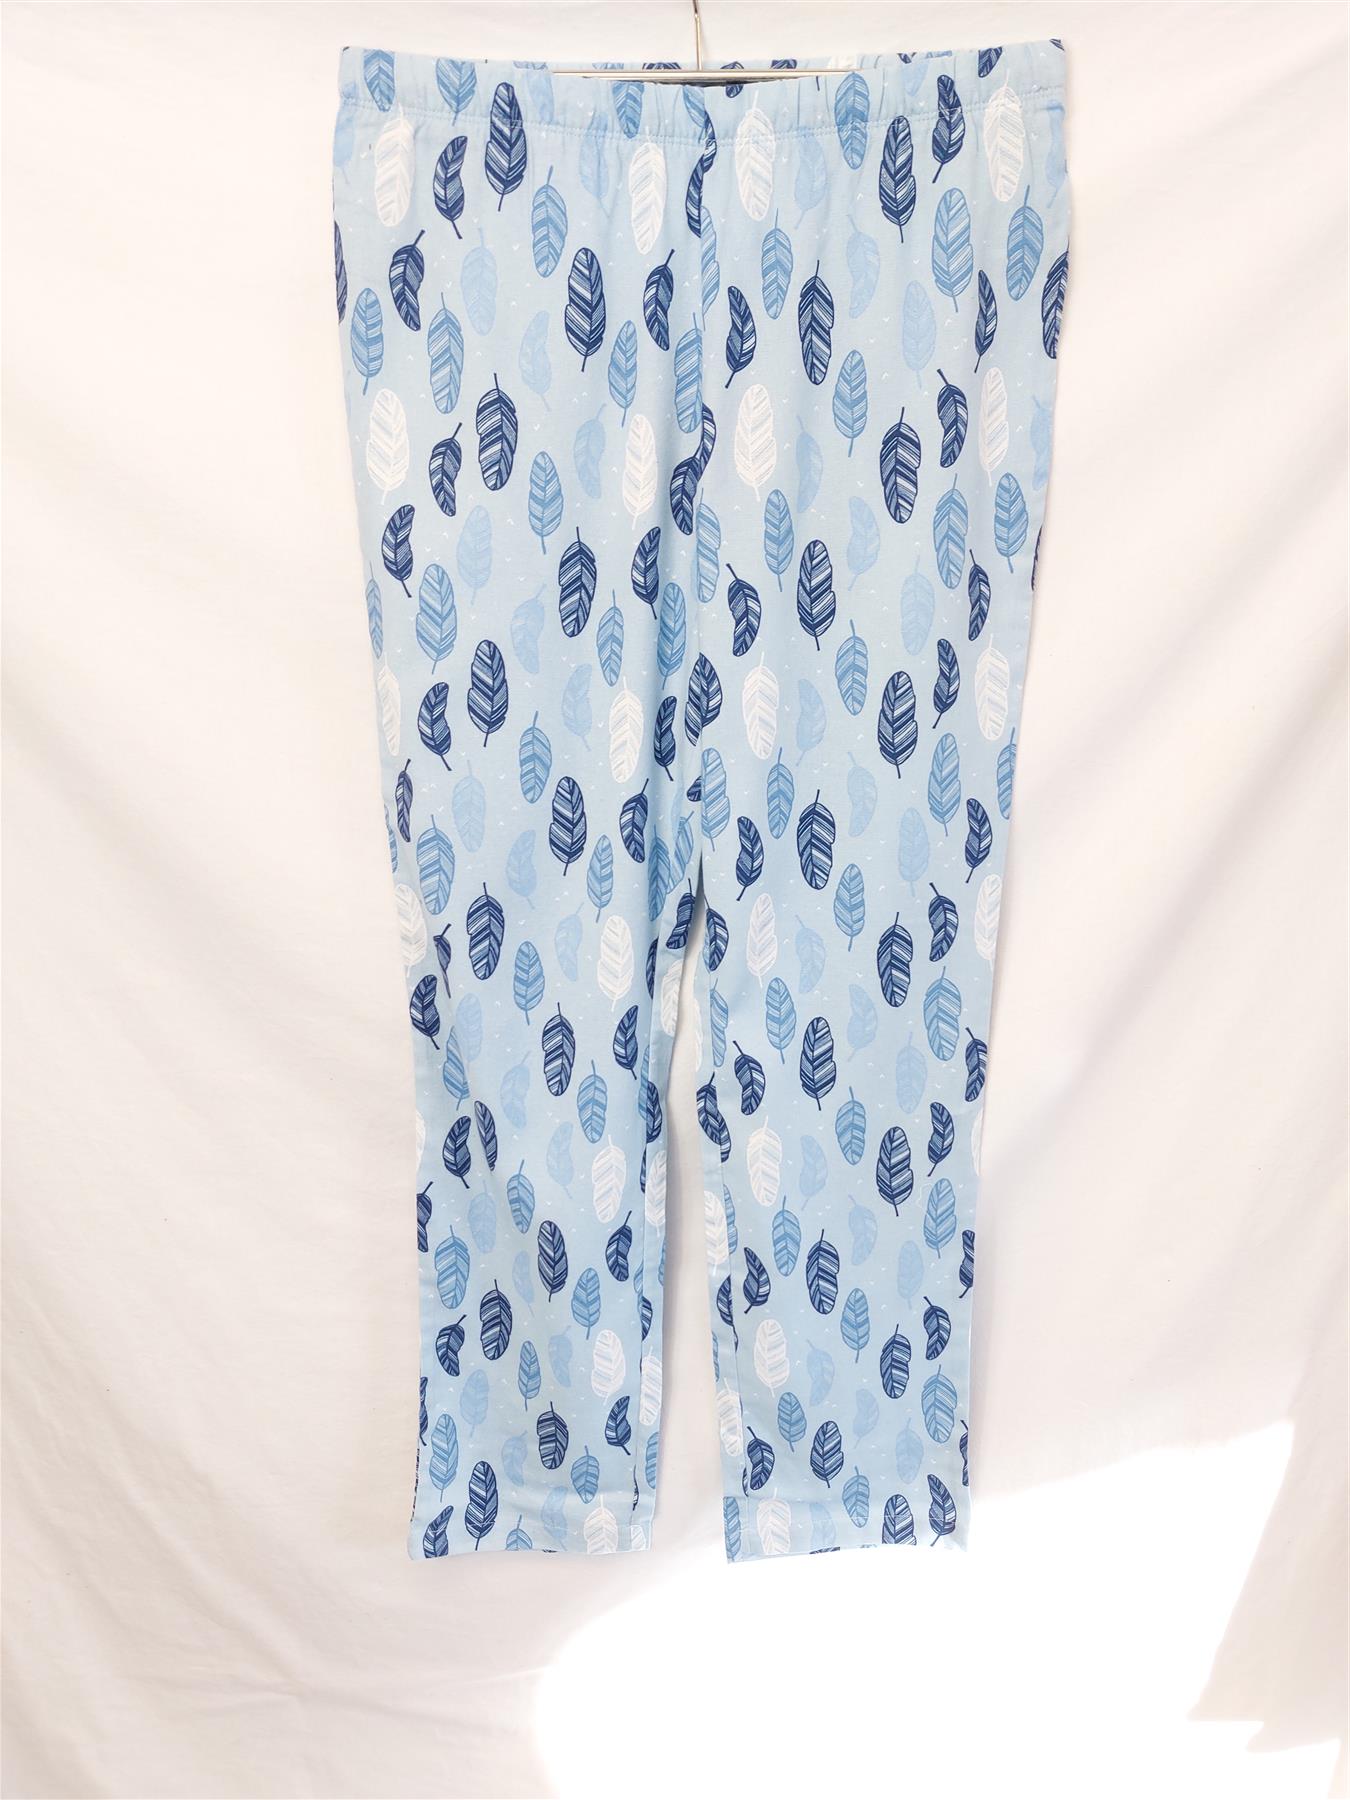 Women's Cotton Pyjama Bottoms Blue Feather Print Soft Comfy PJ Pants Brand New